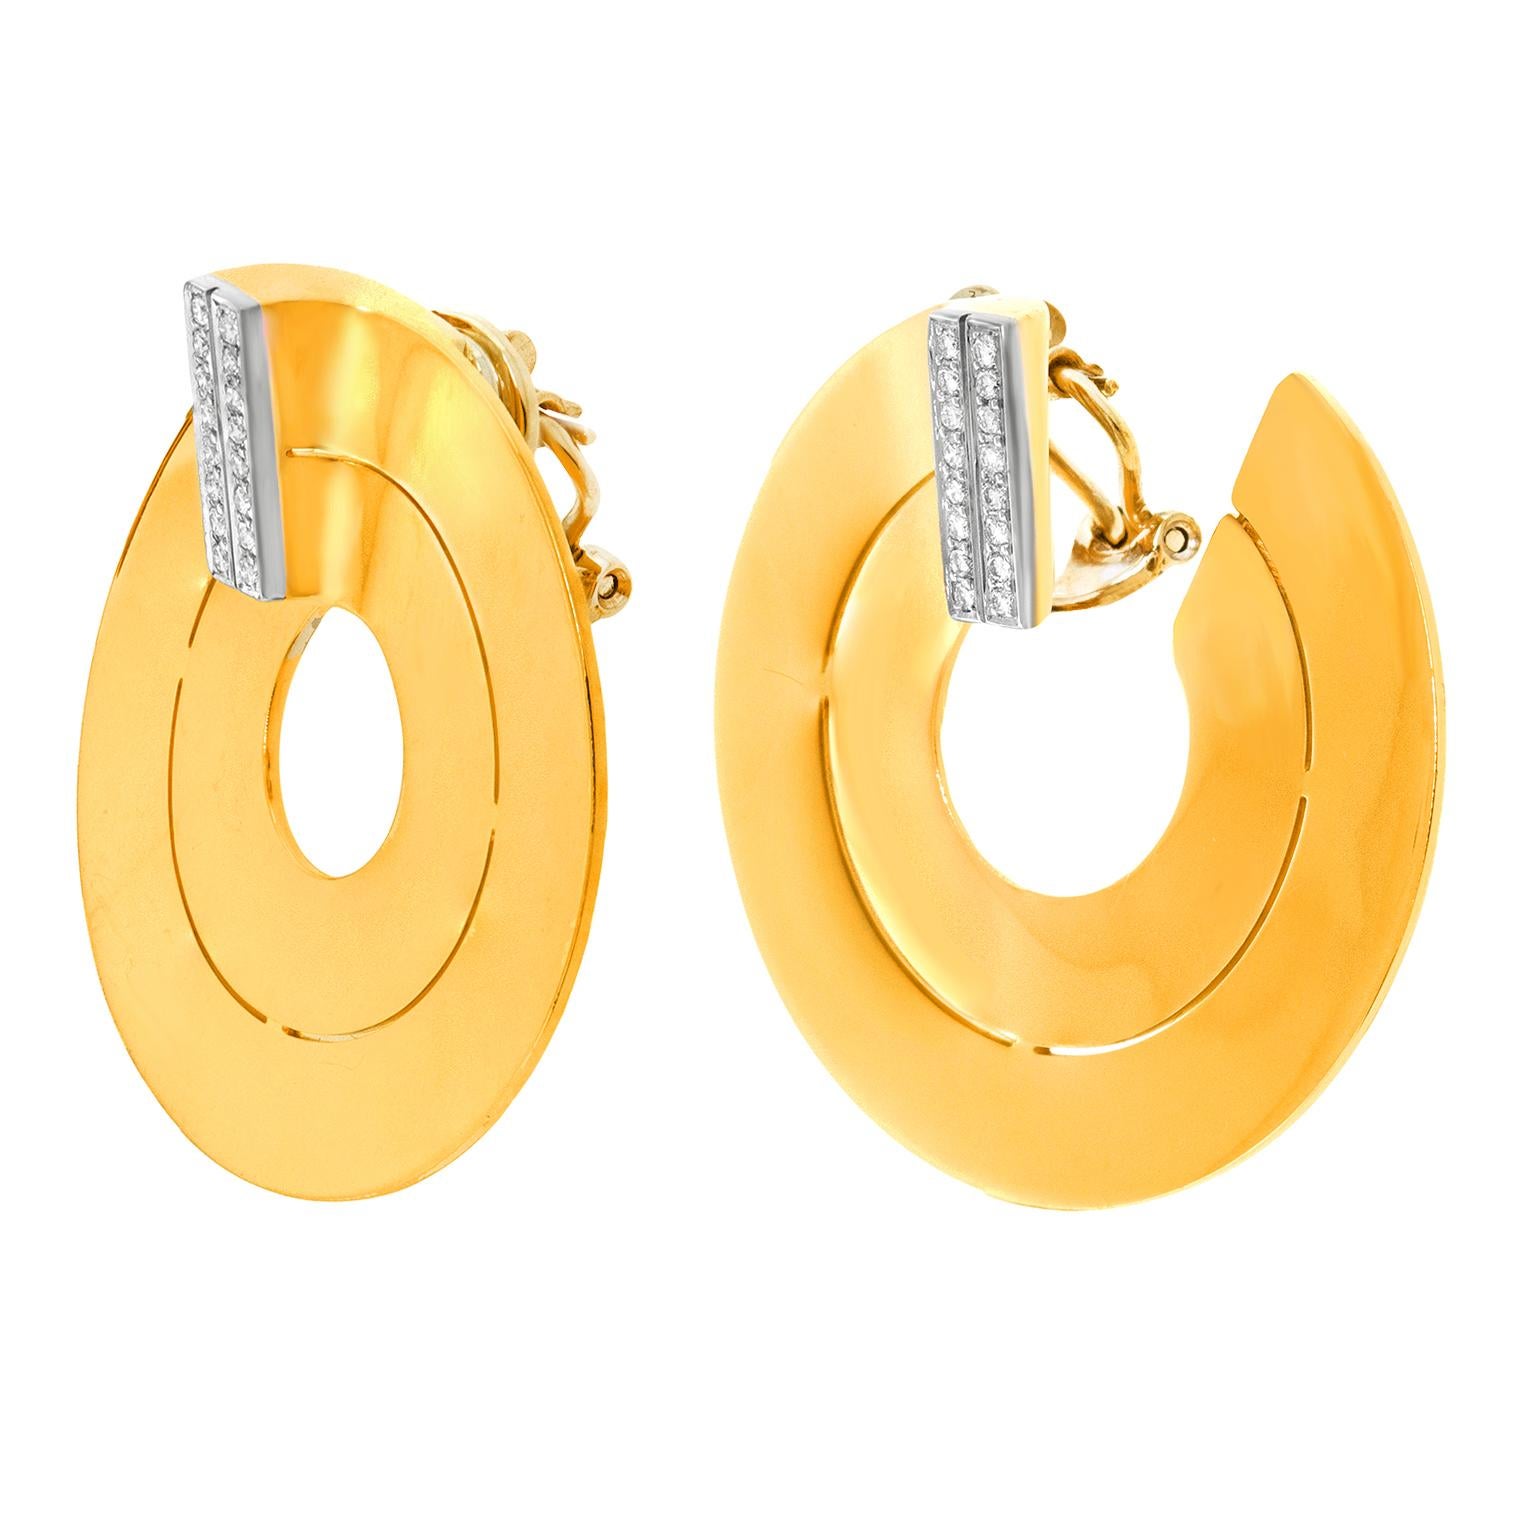 Modernist Paul Binder Swiss Modern Diamond-set Gold Earrings For Sale